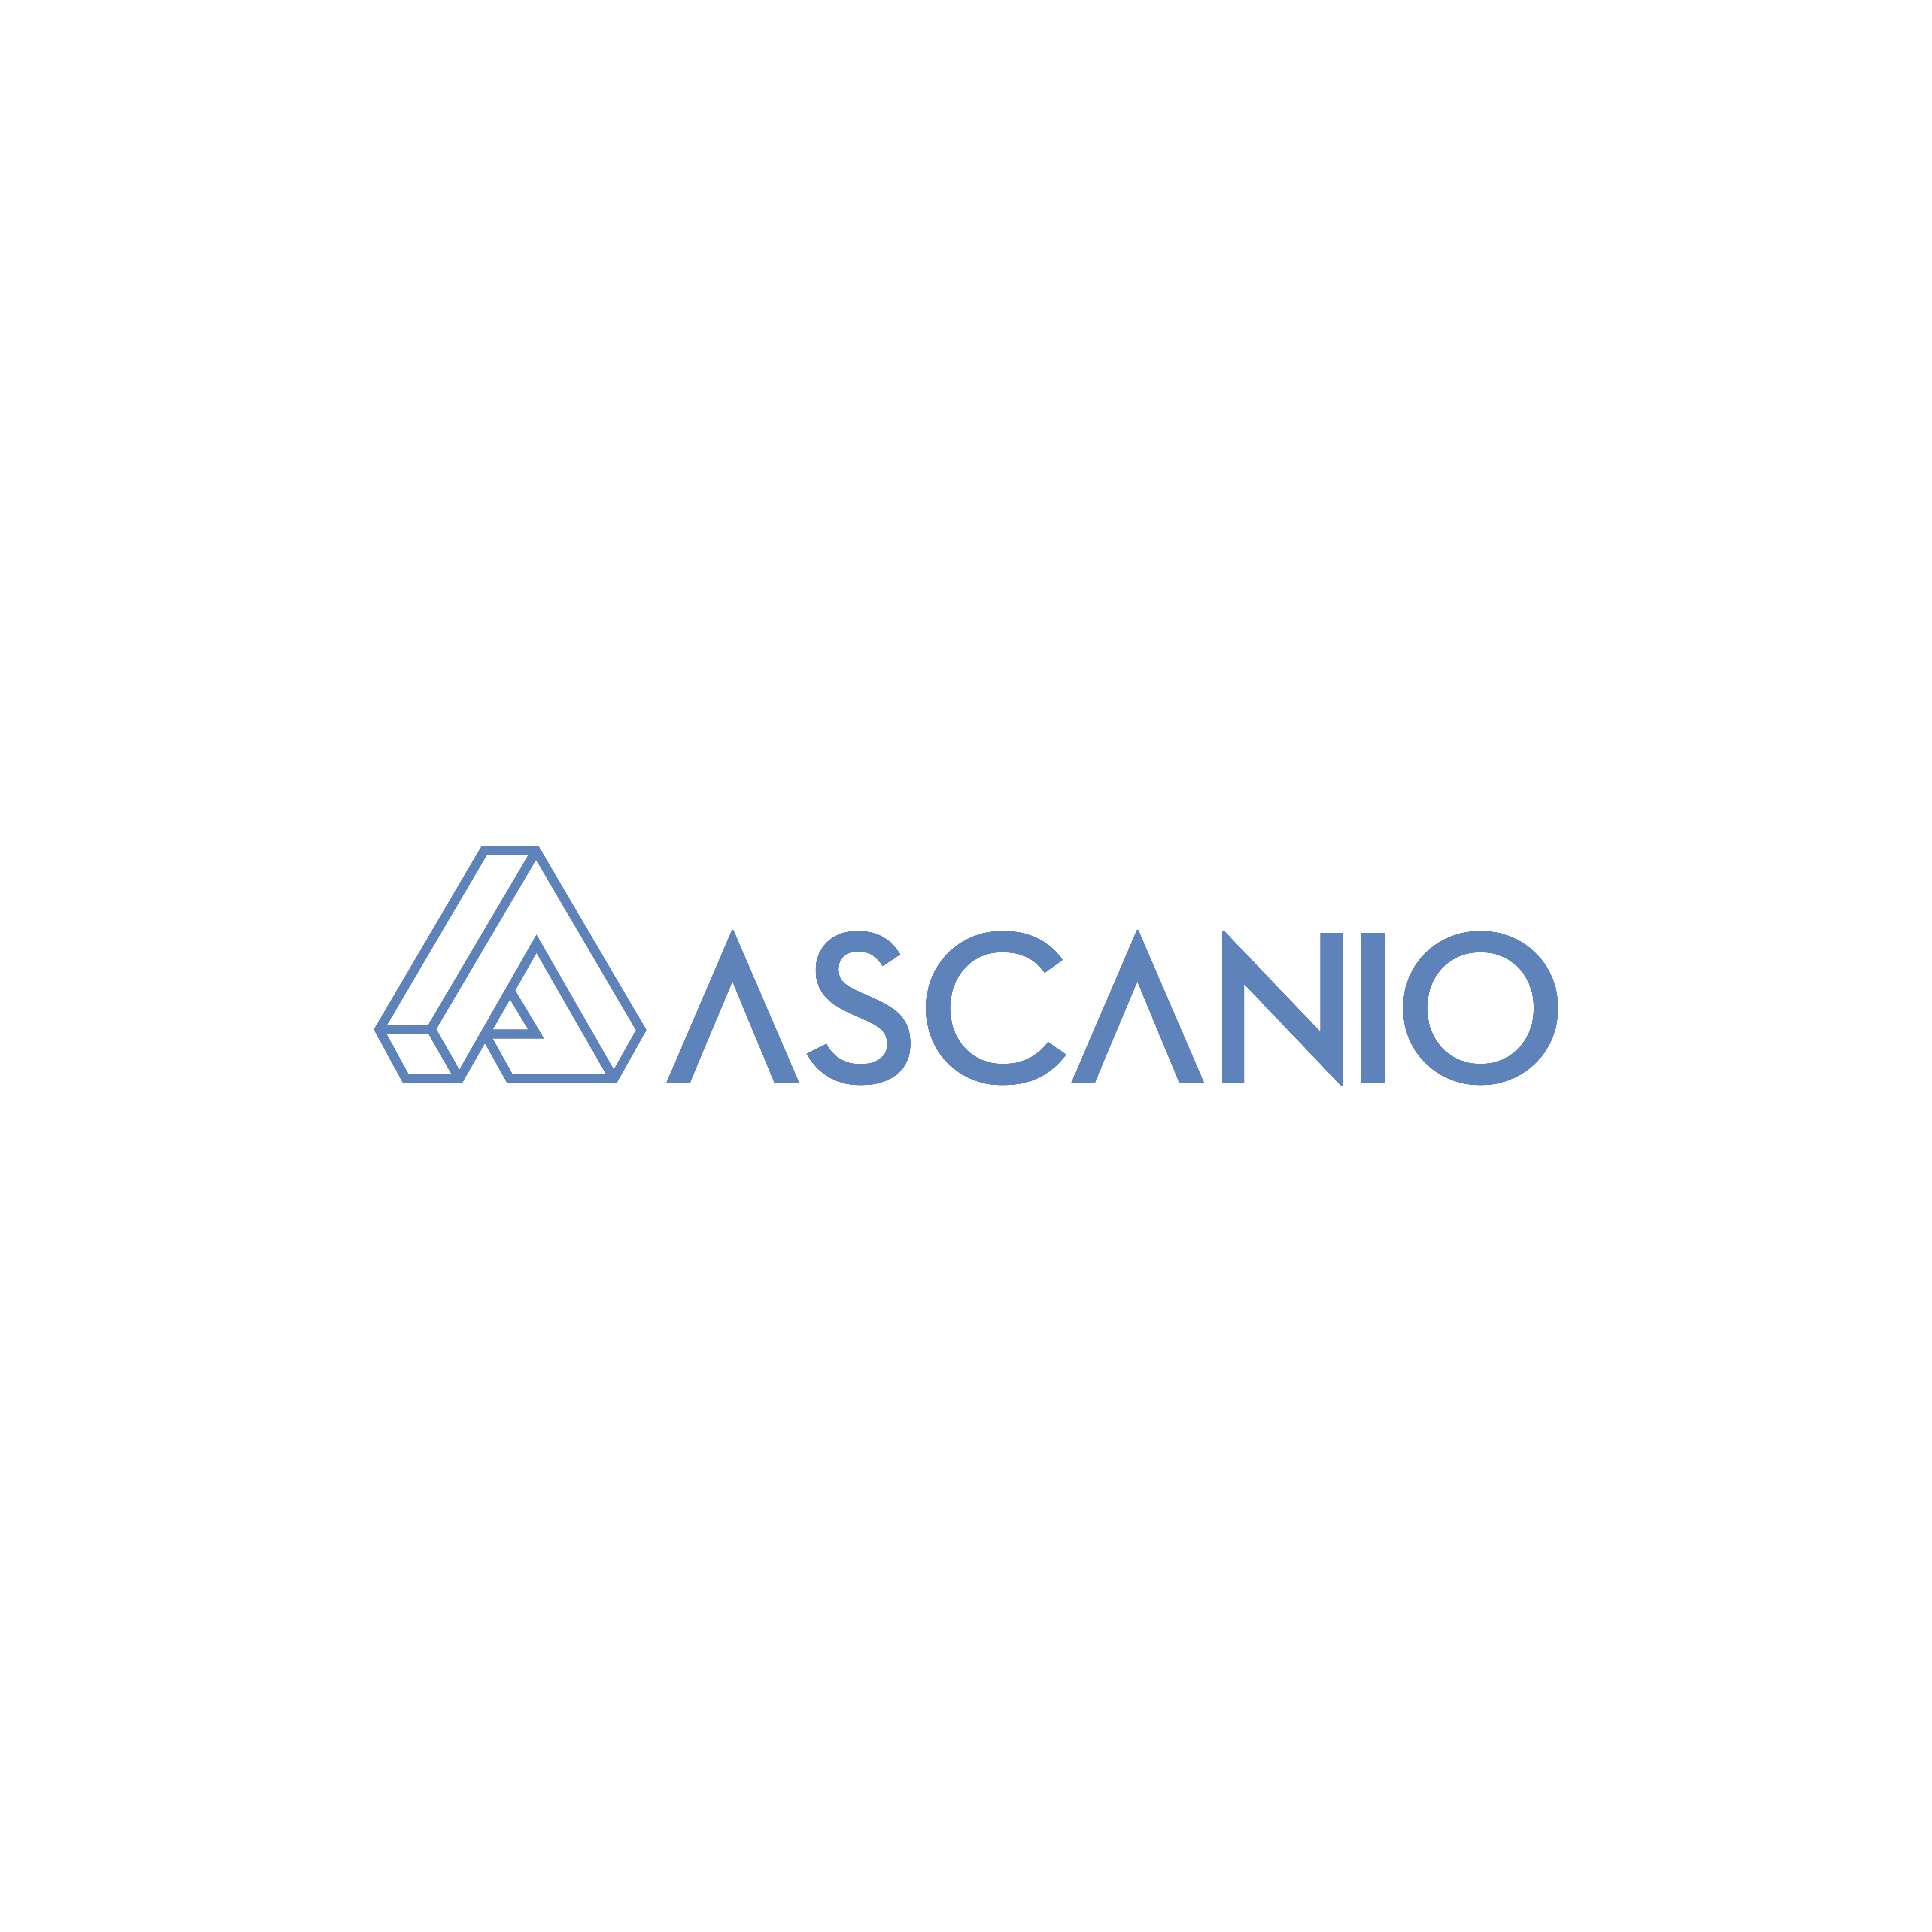 Ascanio Entertainment Ltd